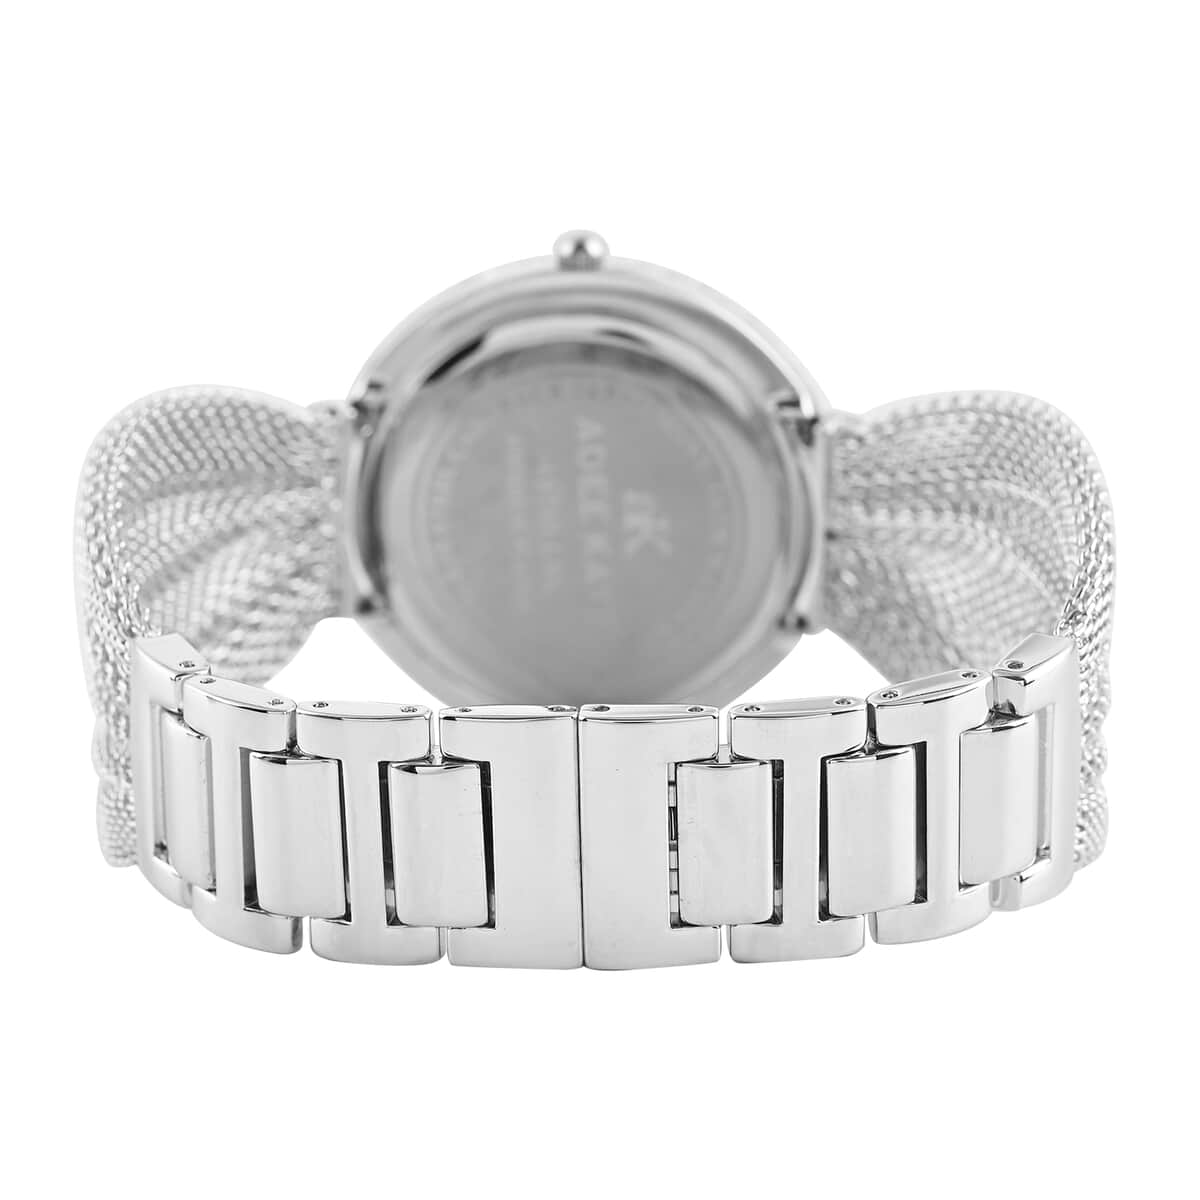 ADEE KAYE Austrian Crystal Japan Quartz Movement Black Dial Watch in Silvertone Strap (40.9 mm) image number 3